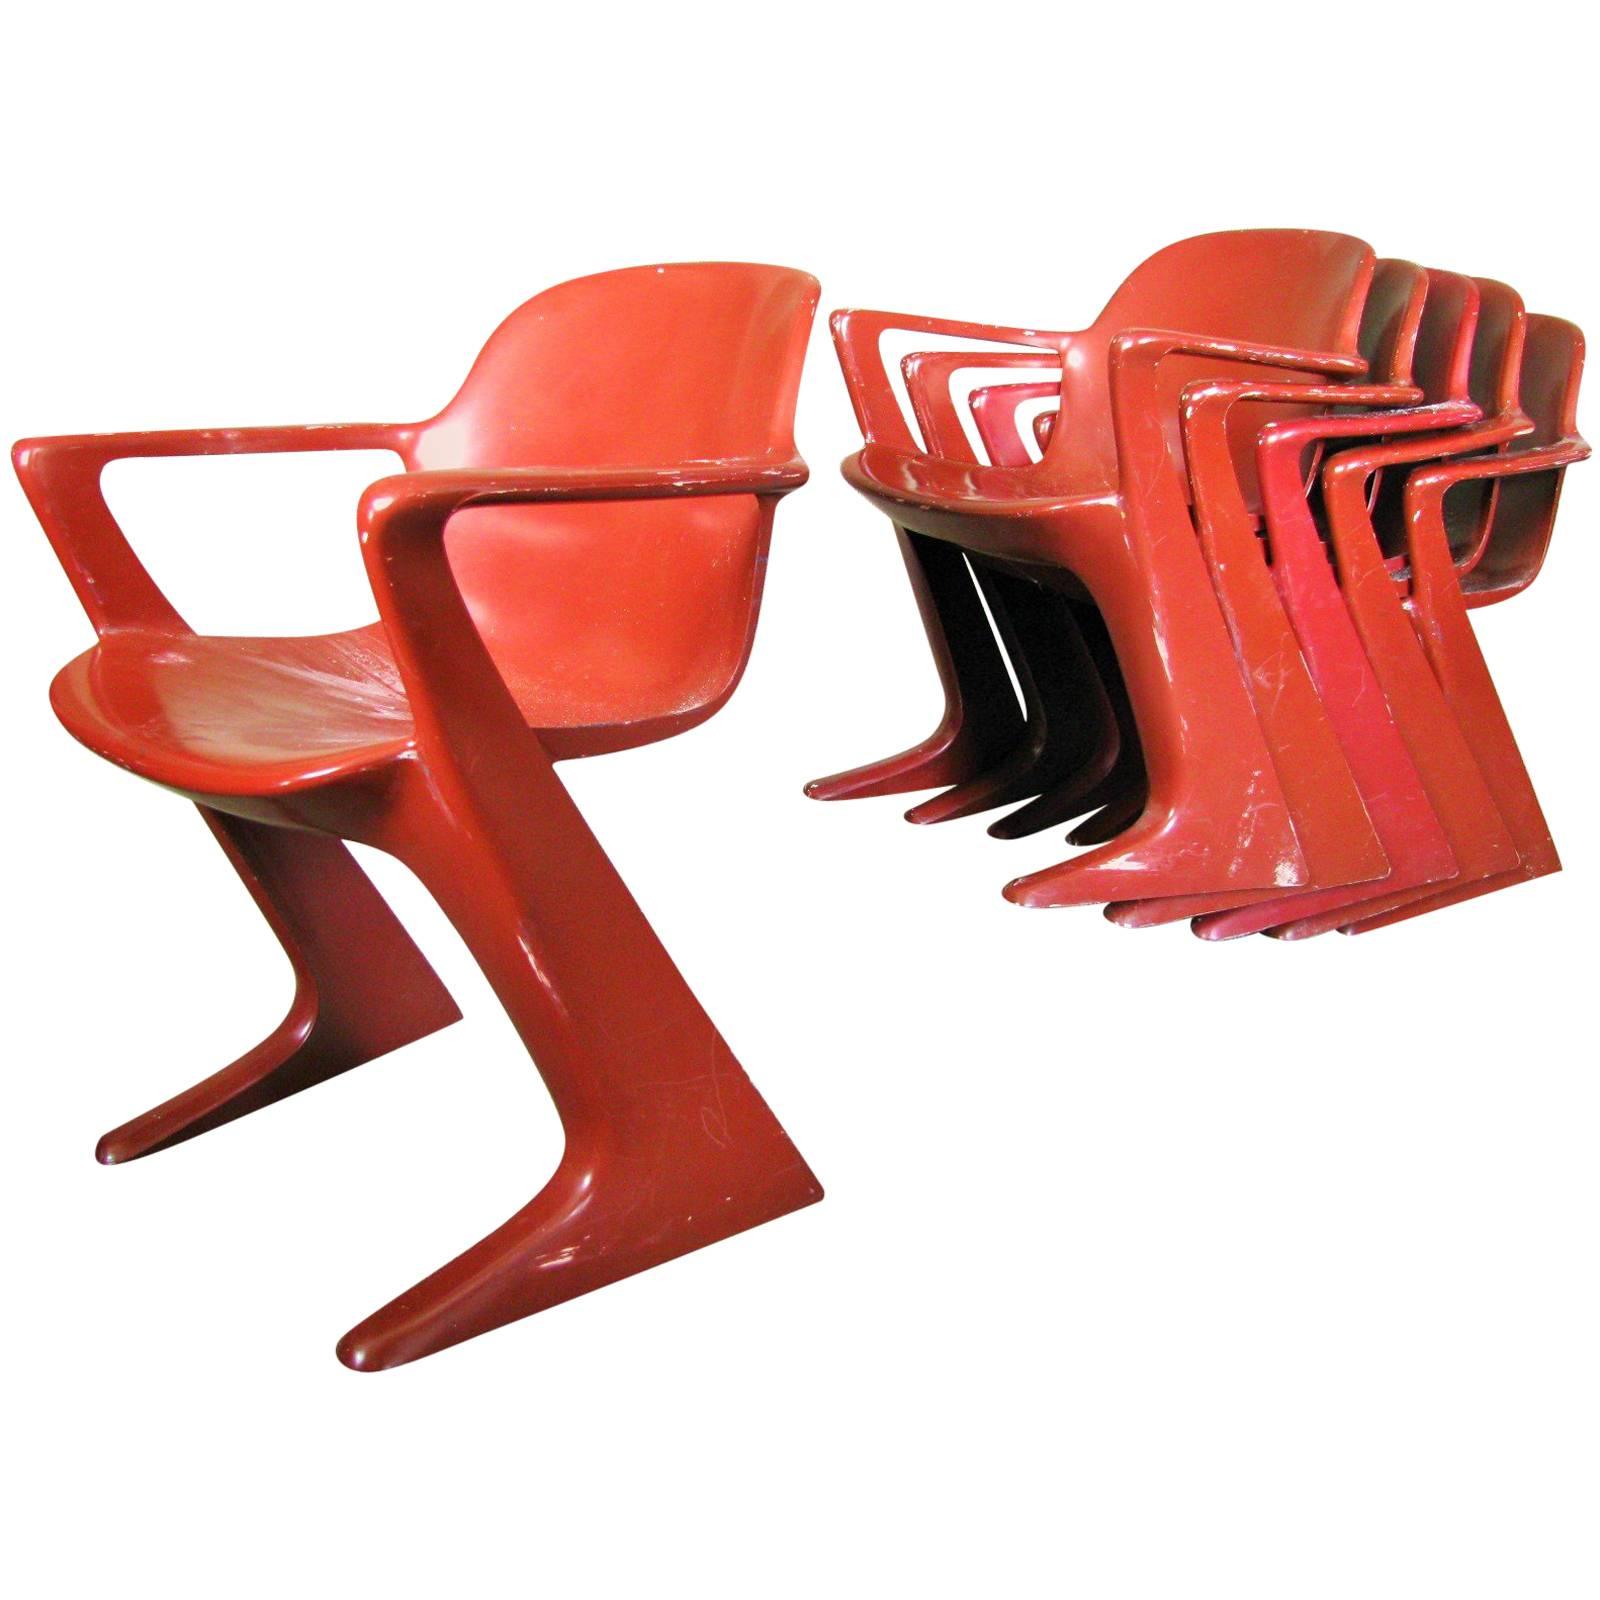 Midcentury German Kangoroo Chair by Ernst Moeckl, 1968 For Sale